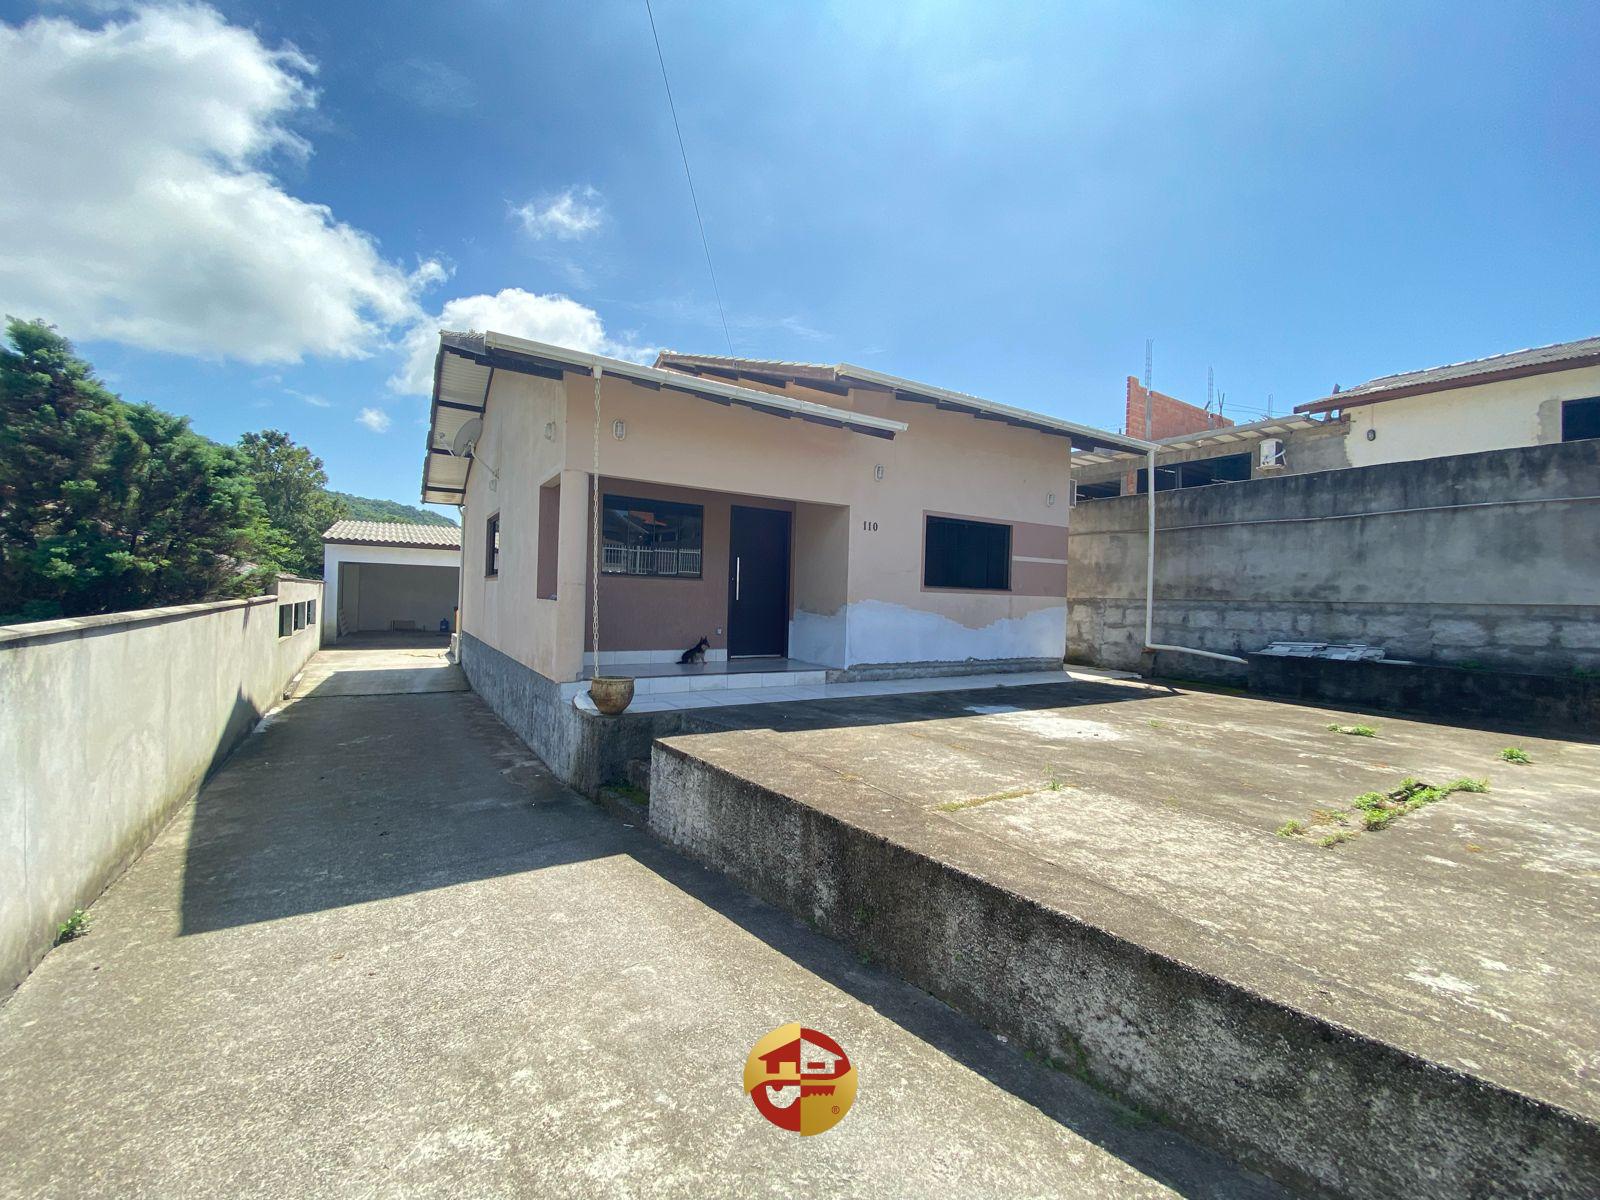 Casa para comprar em Imbituba, bairro Vila Nova, at? 500 mil.